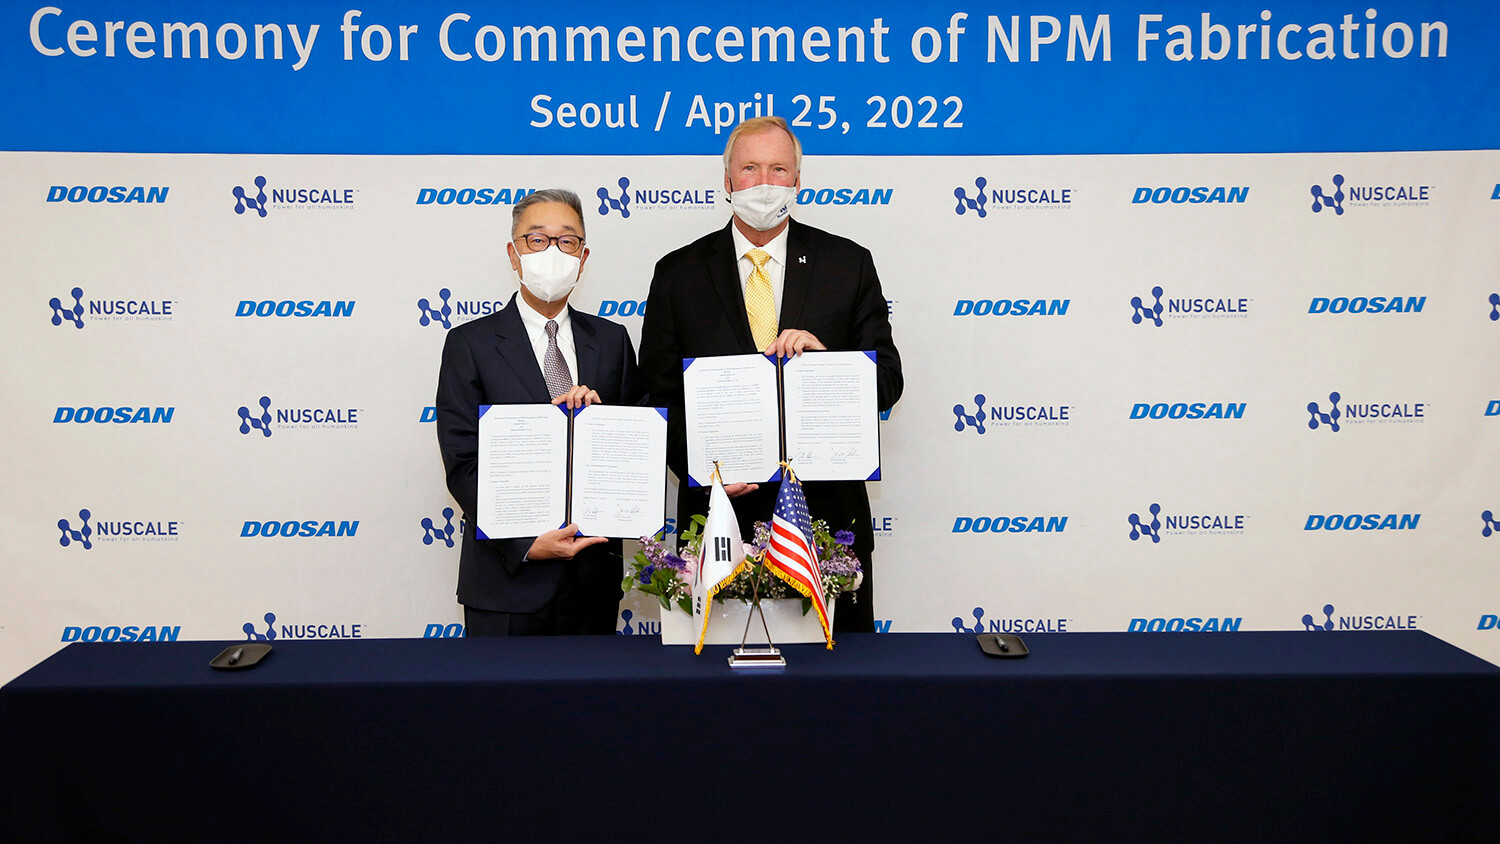 Doosan Fabrication Agreement Signing Ceremony